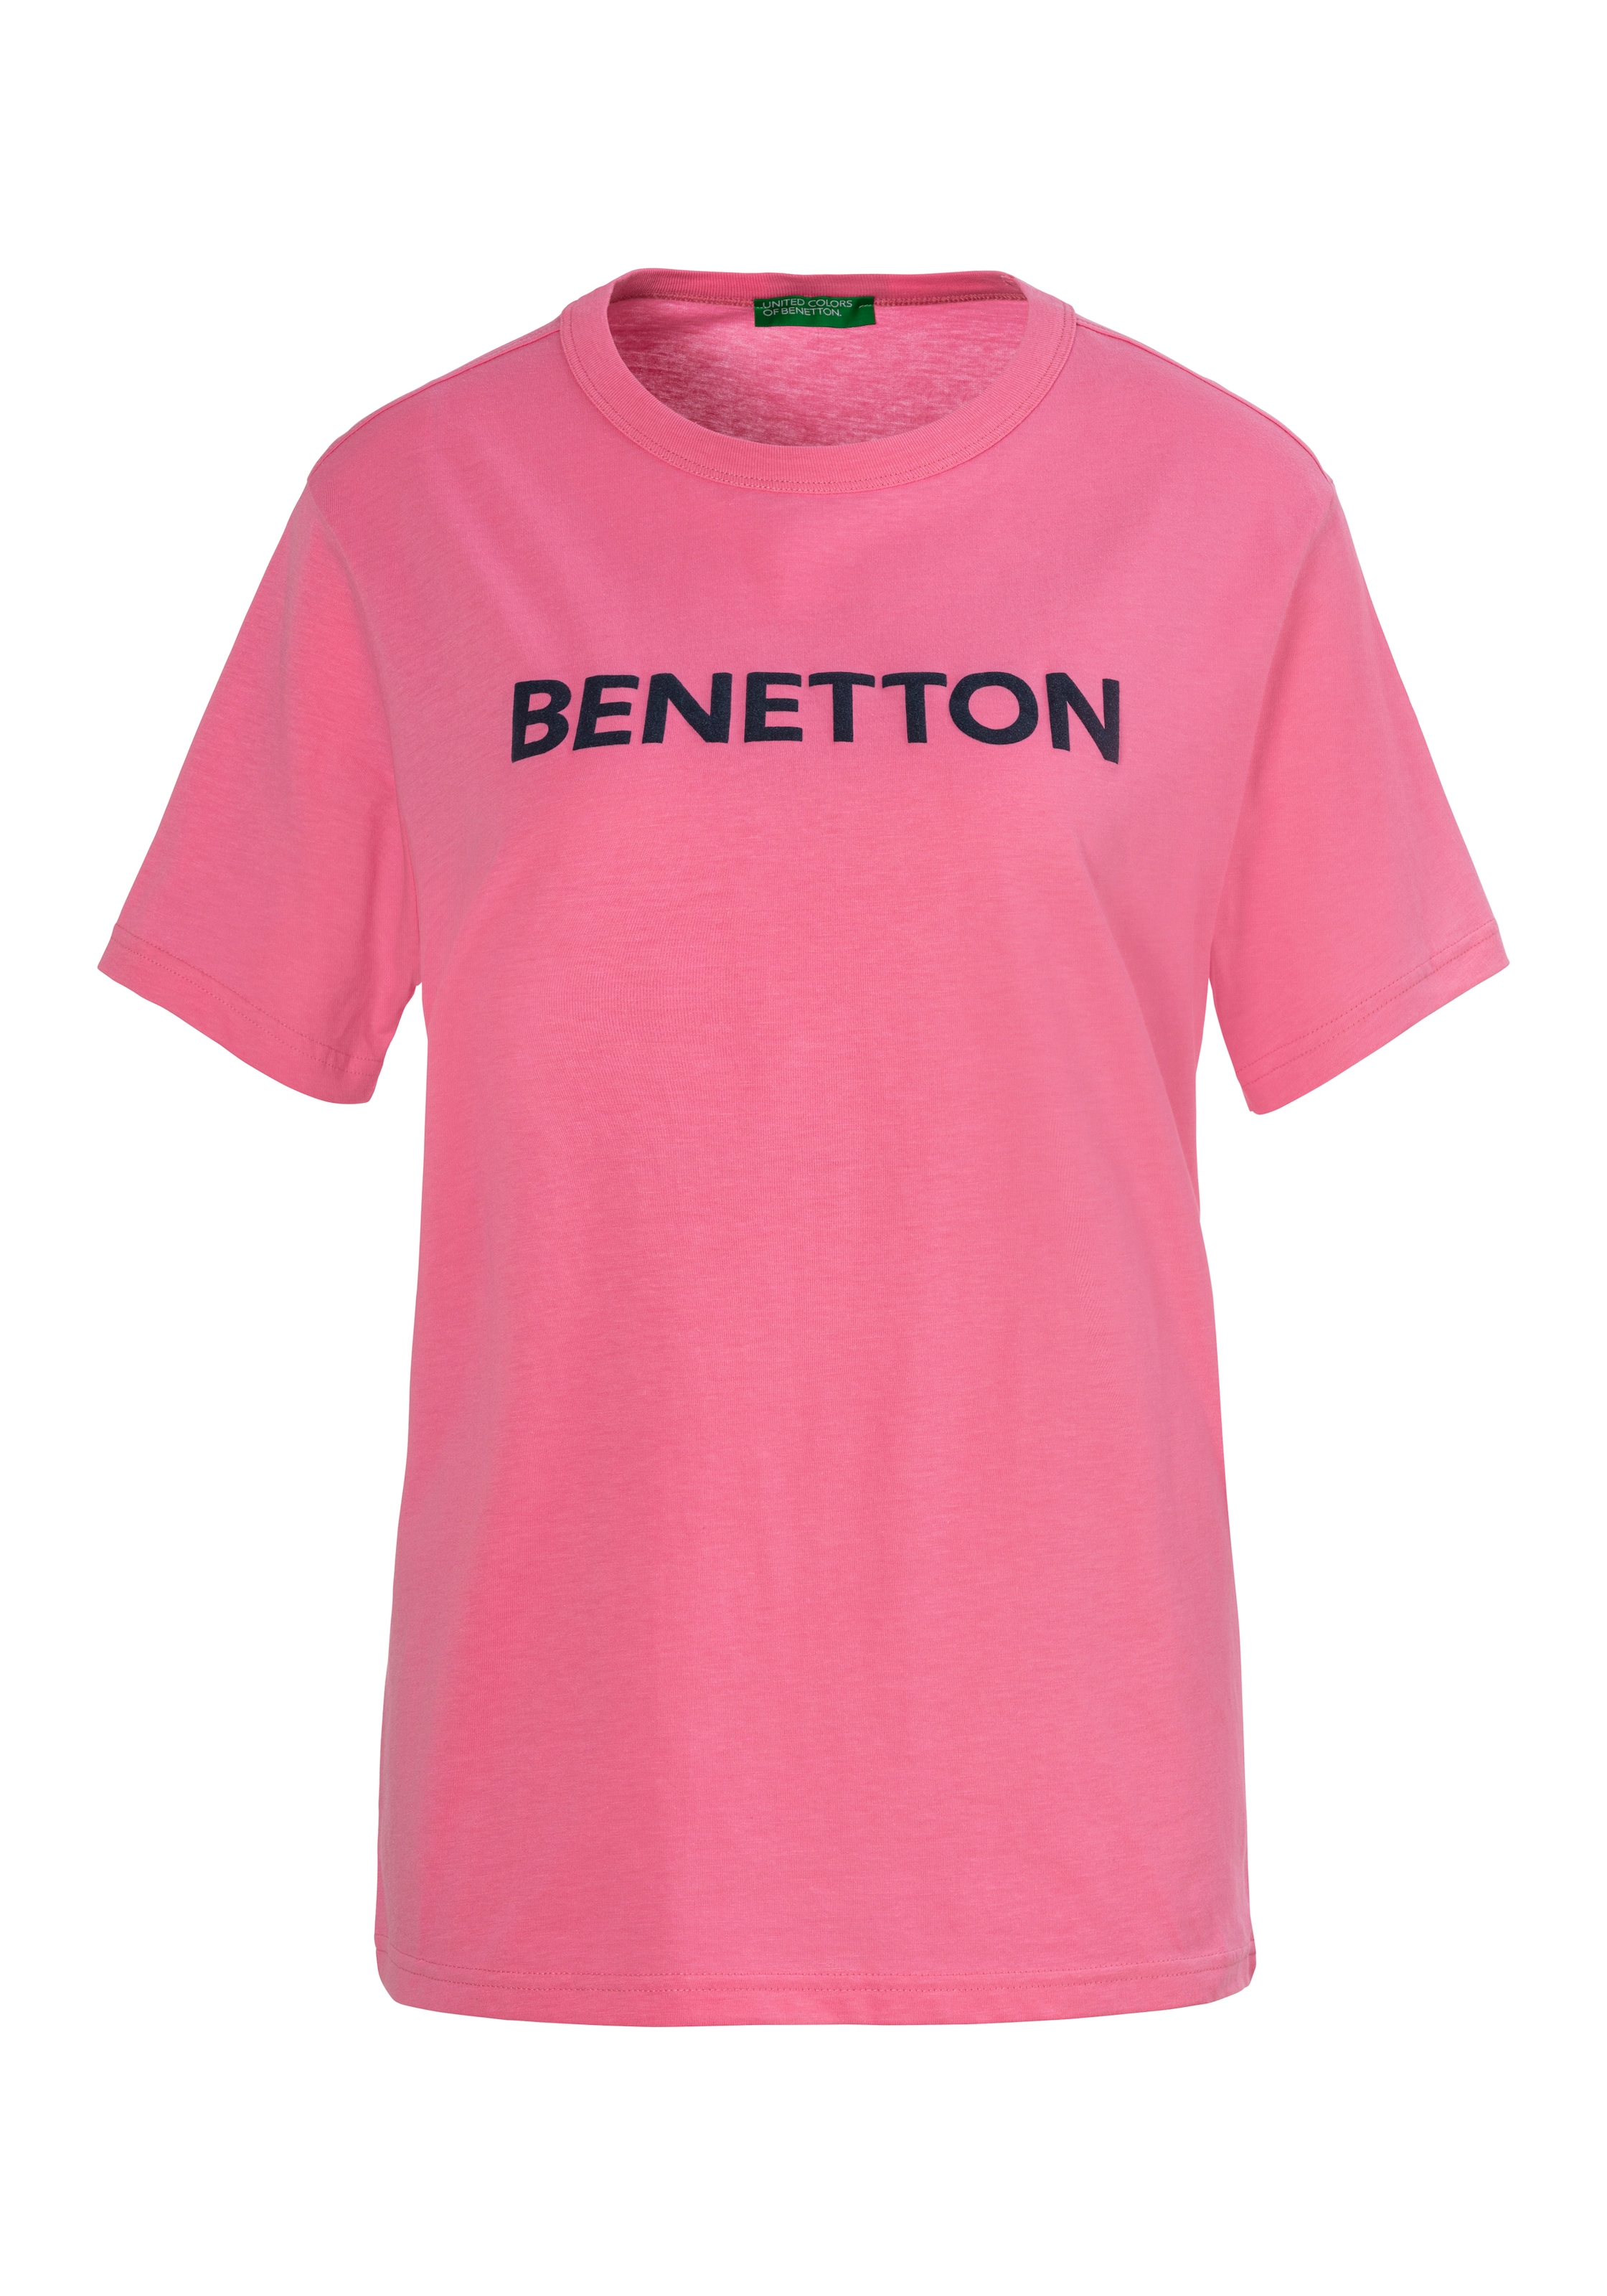 United Colors of Benetton T-Shirt, mit Benetton Aufdruck